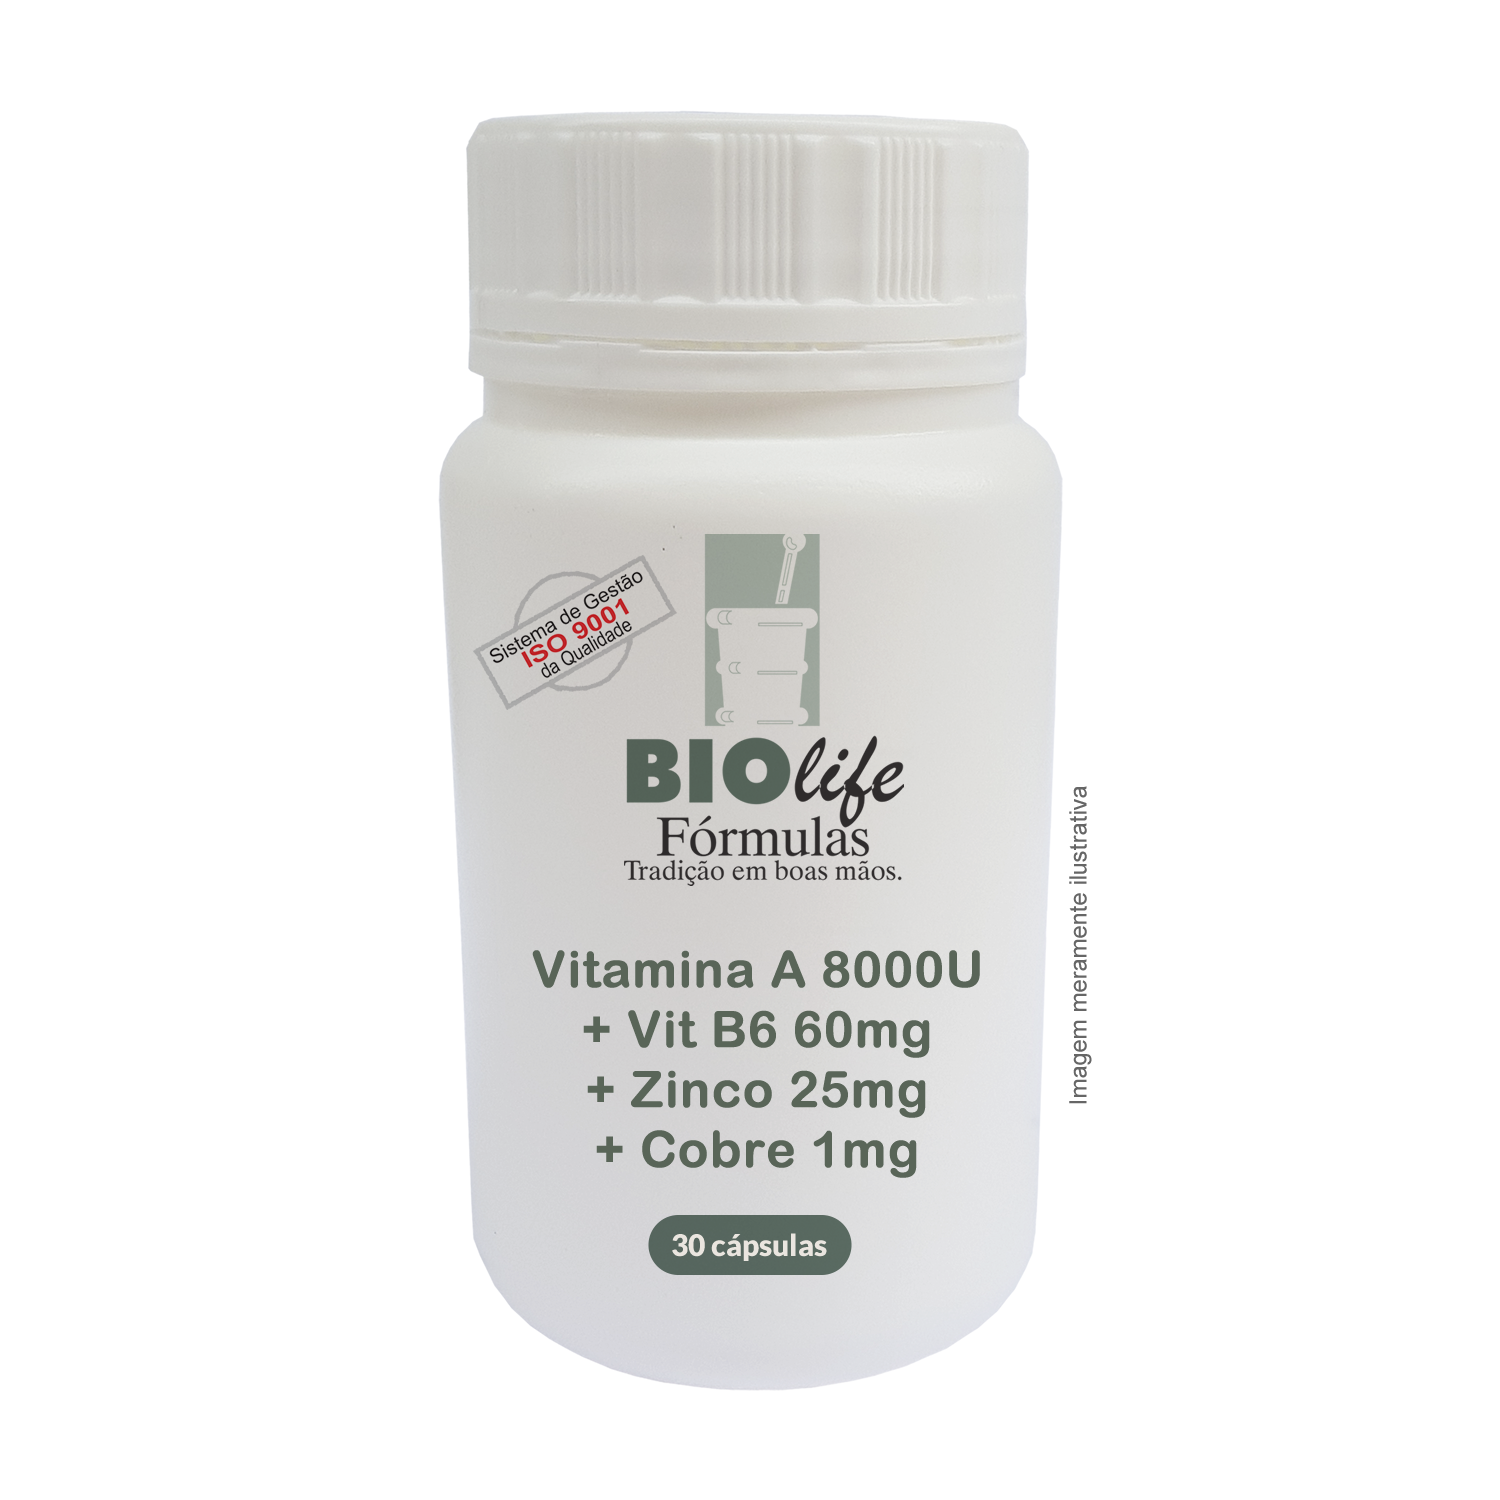 Vitamina A 8000U + Vit B6 60mg + Zinco 25mg + Cobre 1mg com 30 cápsulas - BioLife